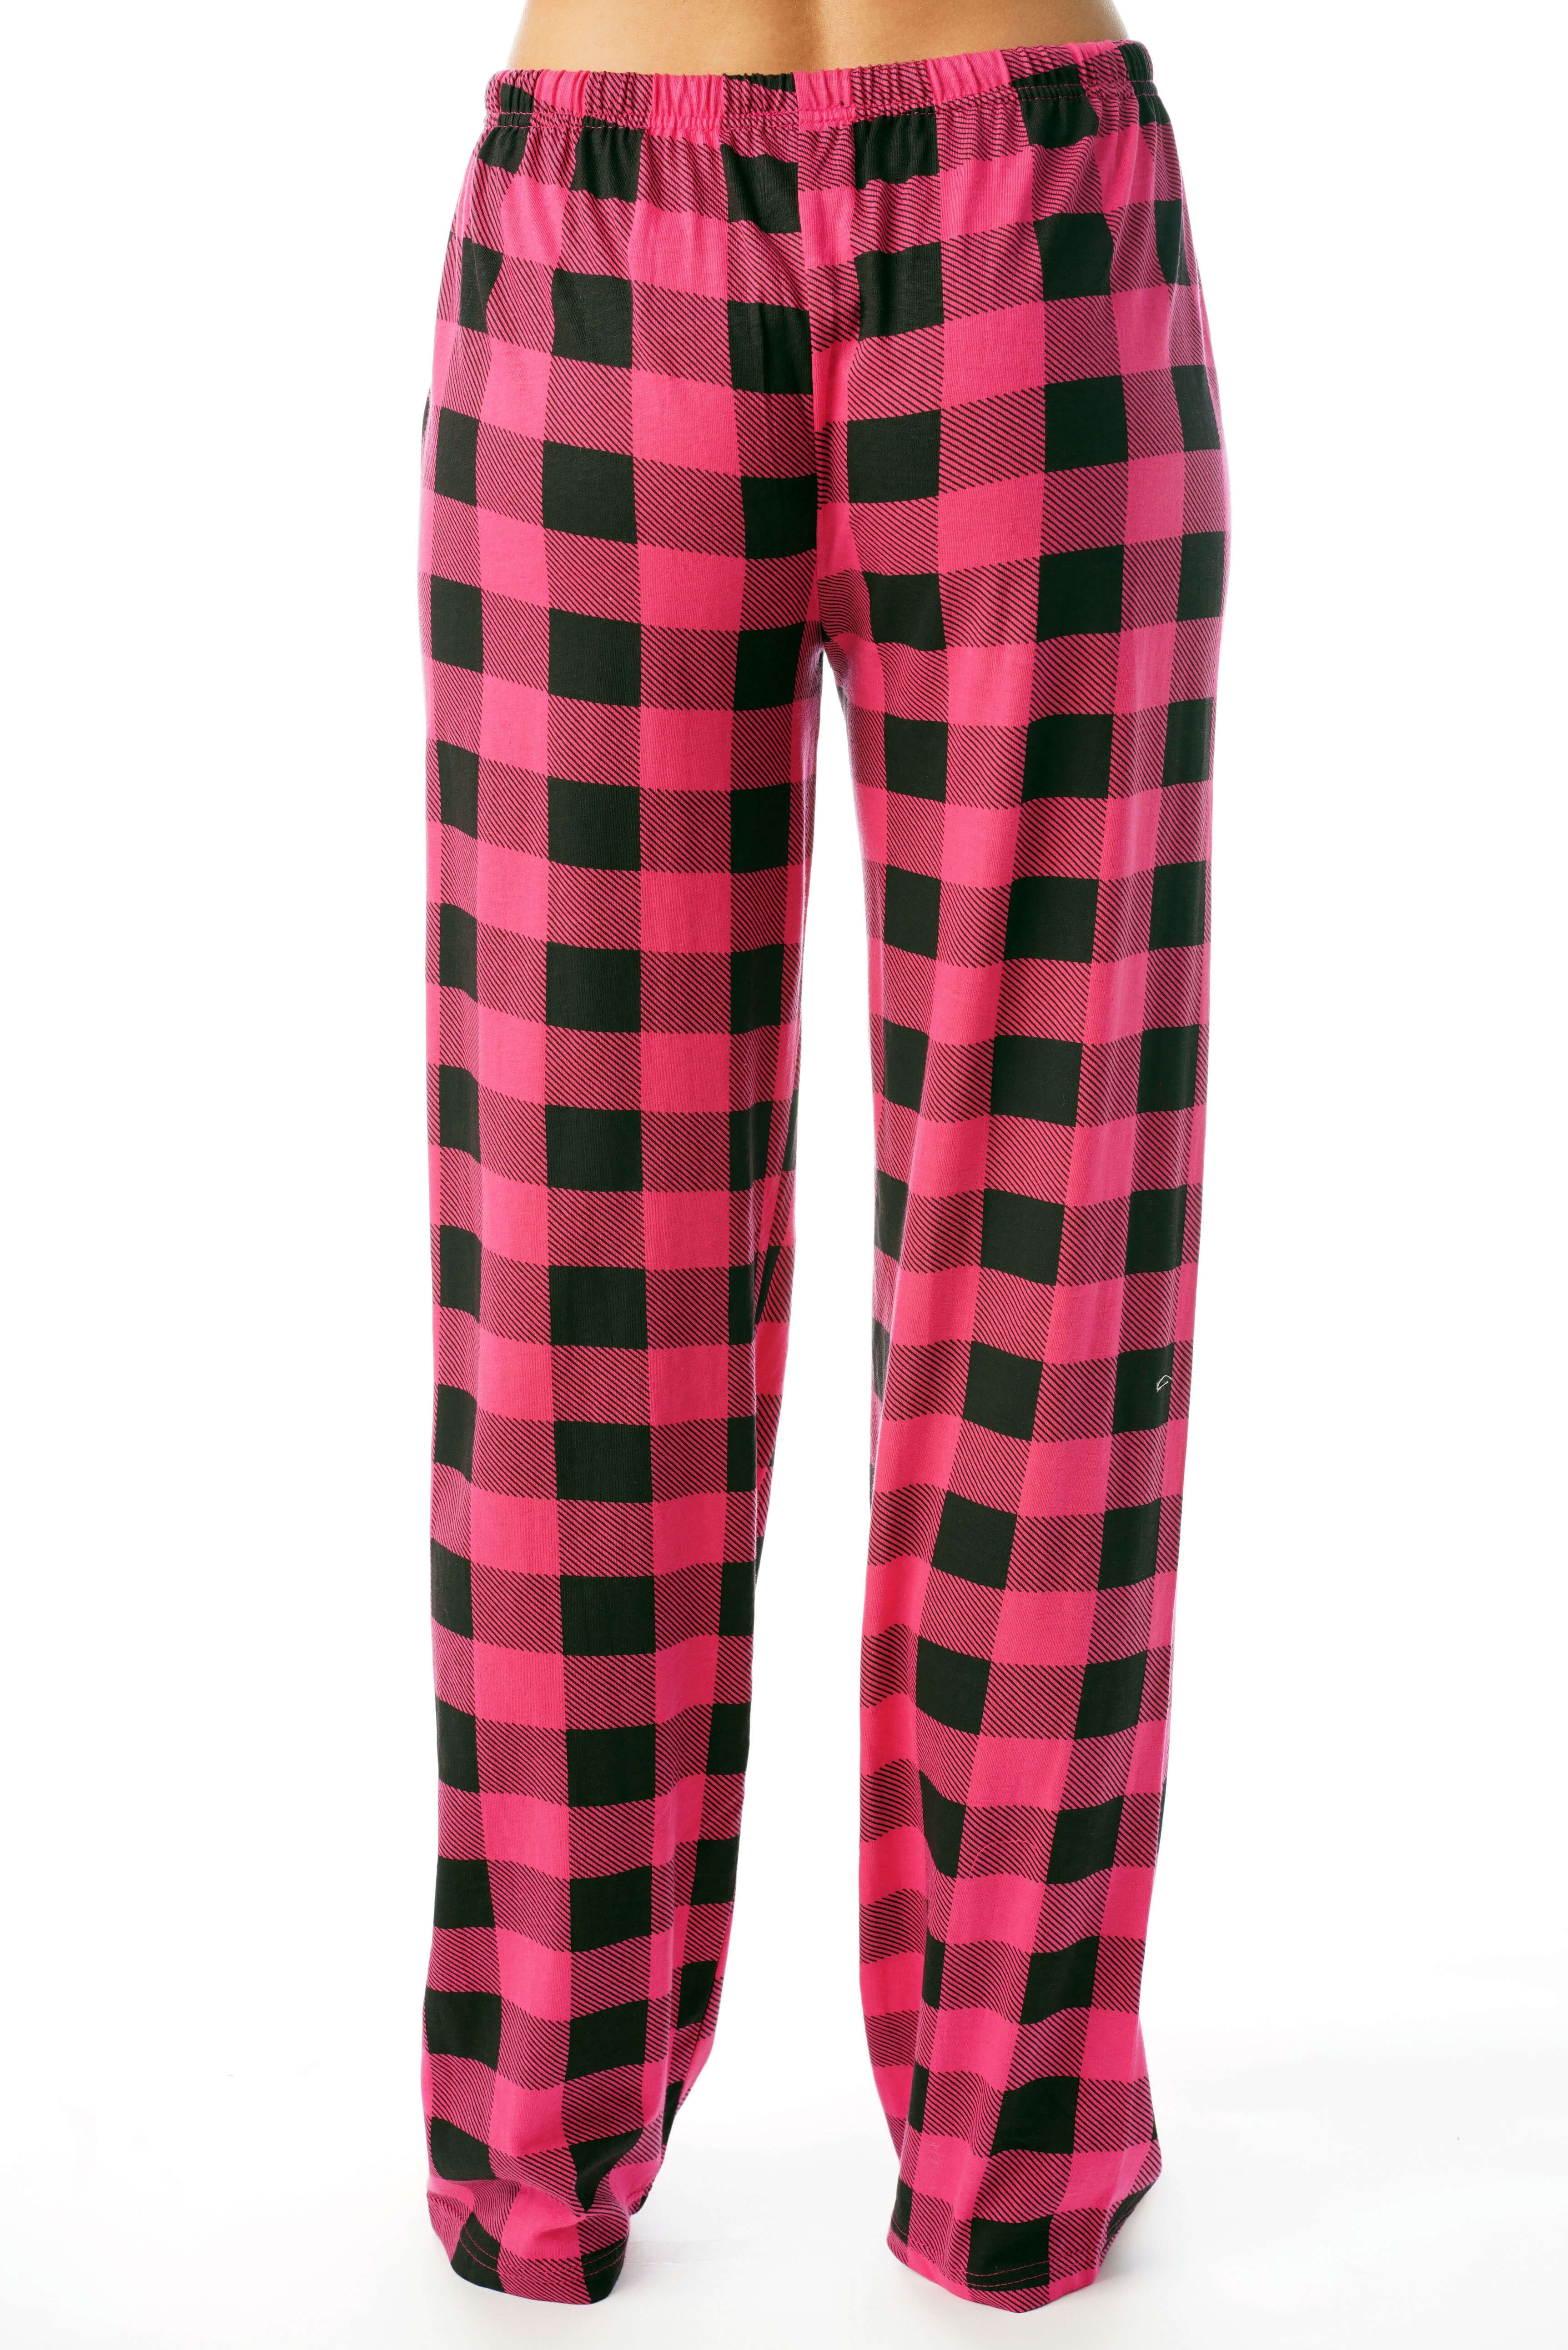 Just Love Women Buffalo Plaid Pajama Pants Sleepwear. (Red Black Buffalo  Plaid, X-Small) 